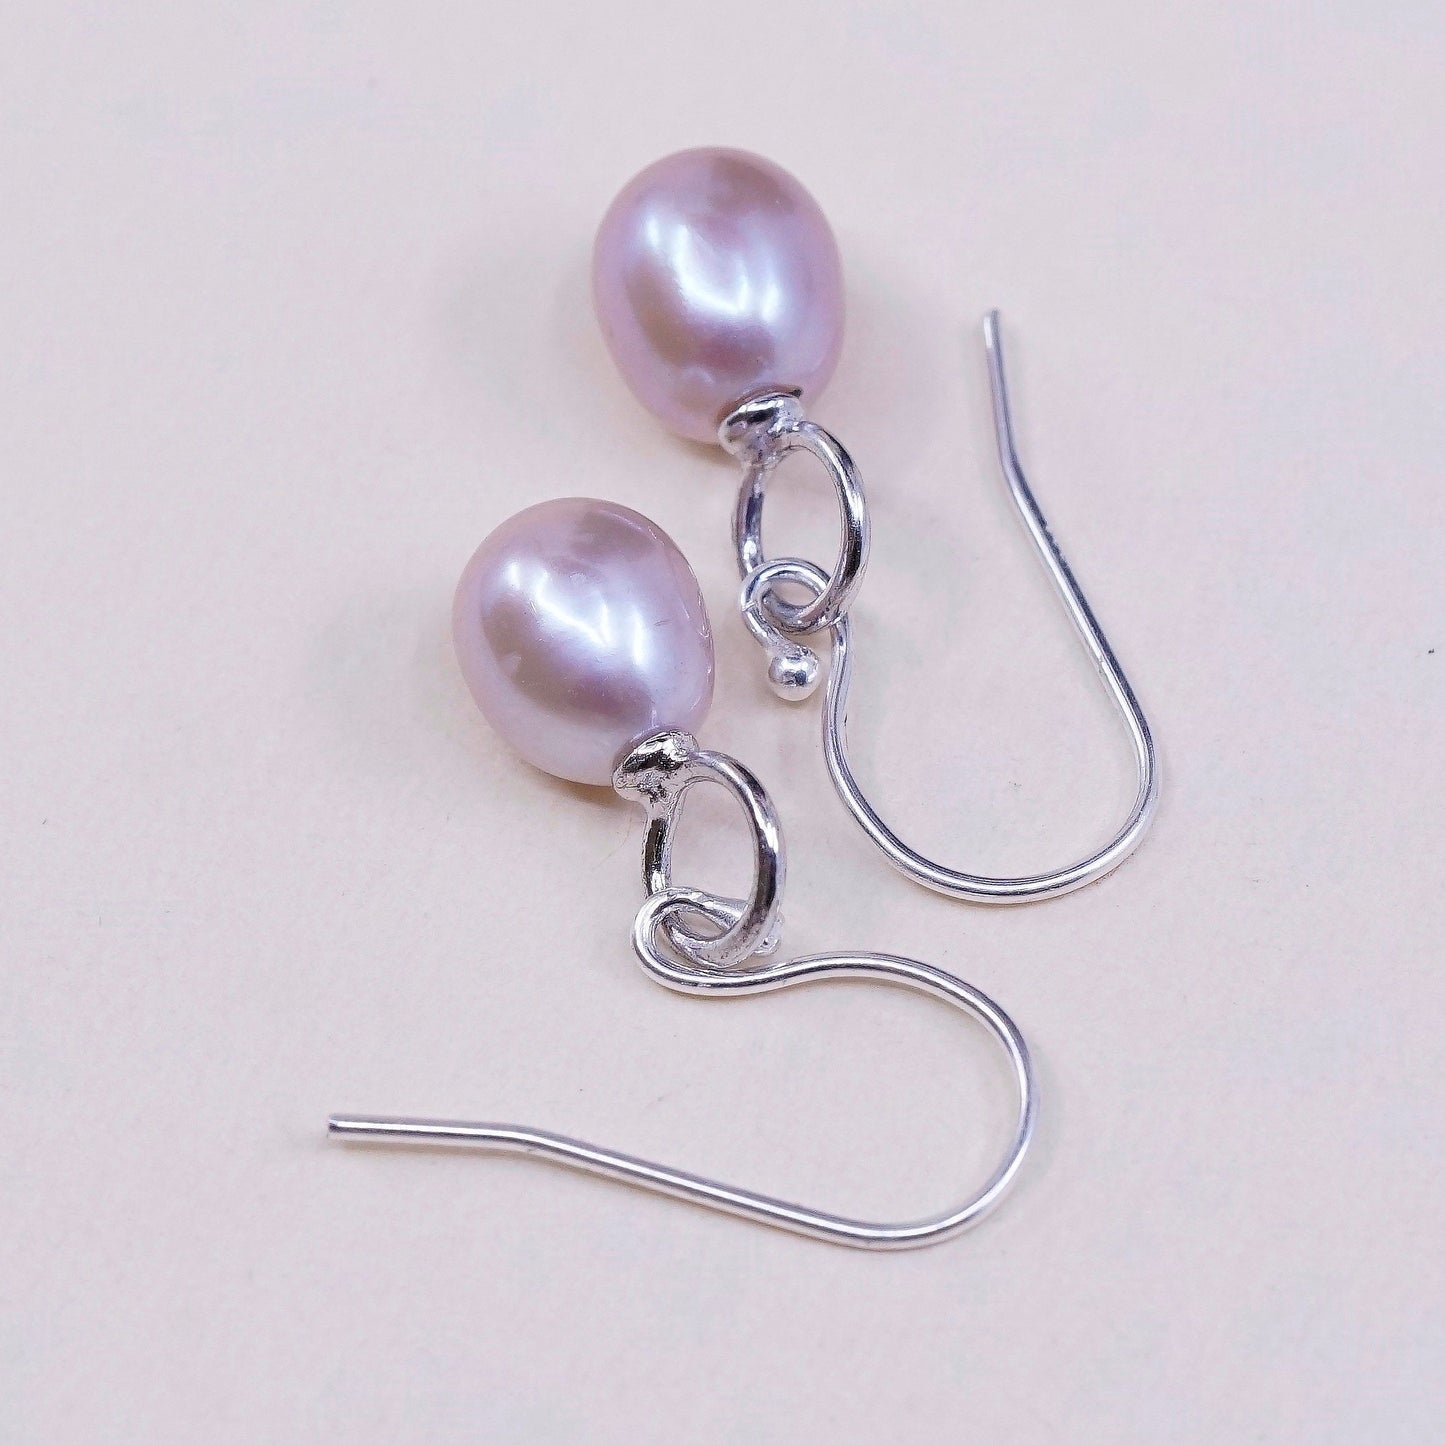 Sterling silver handmade earrings, 925 w/ oval freshwater pearl, silver tested